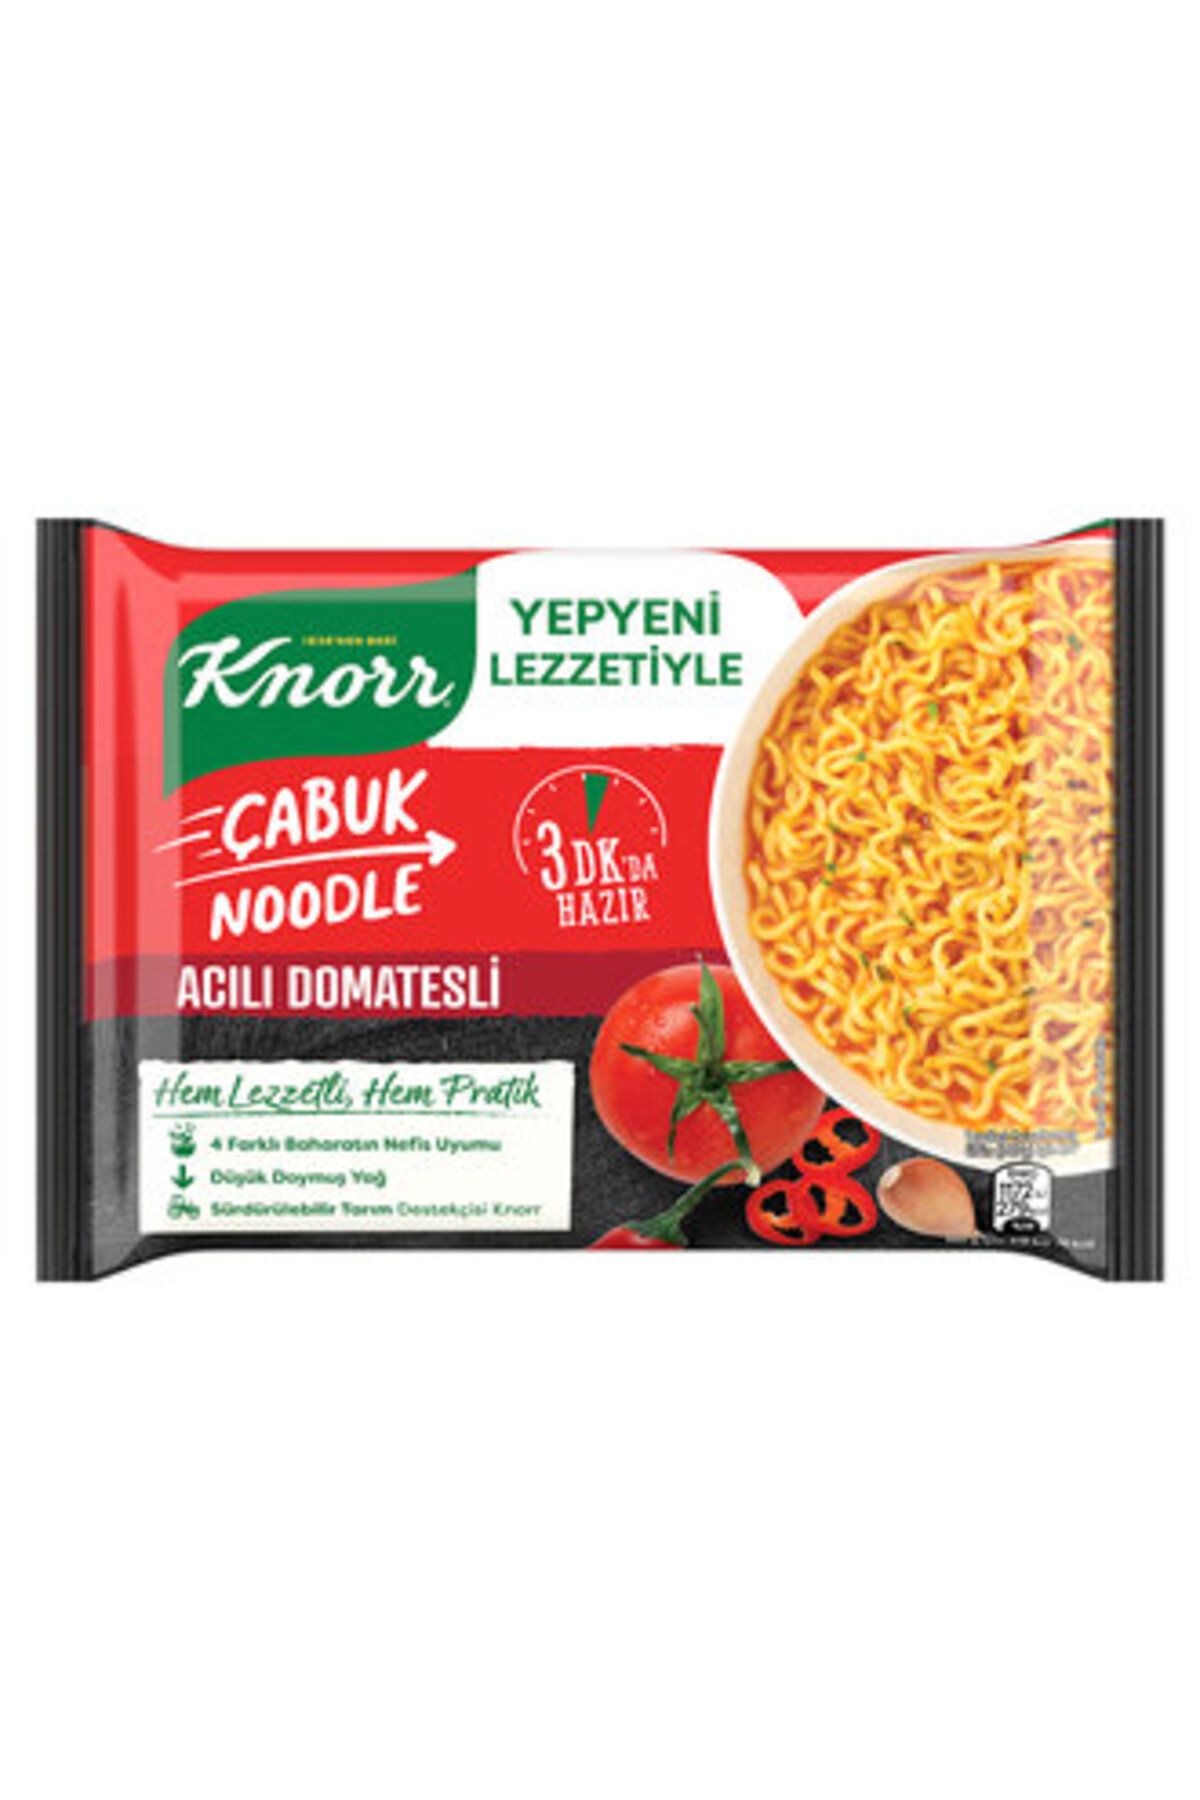 Knorr Acılı Domatesli Çabuk Noodle 67 Gr ( 12 ADET )